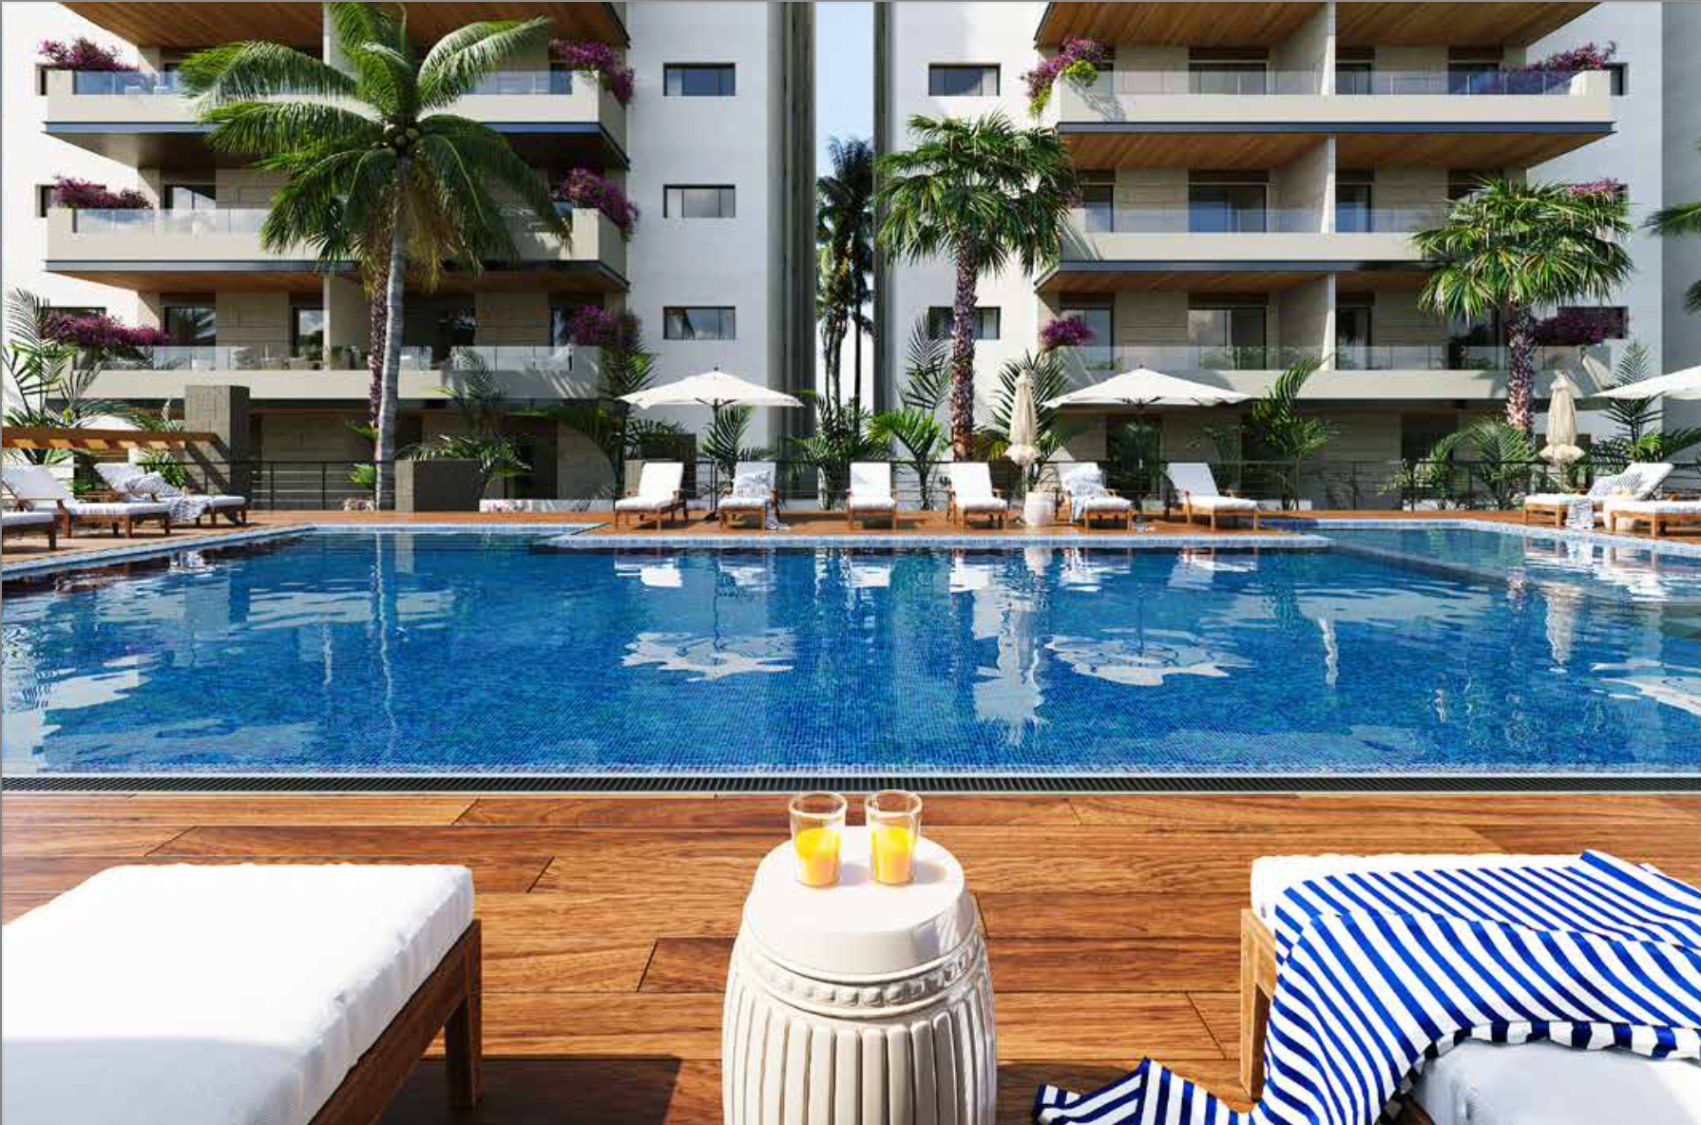 Penthouse con jacuzzi, alberca y pet-garden,  pre-construcción, venta, Cancun.